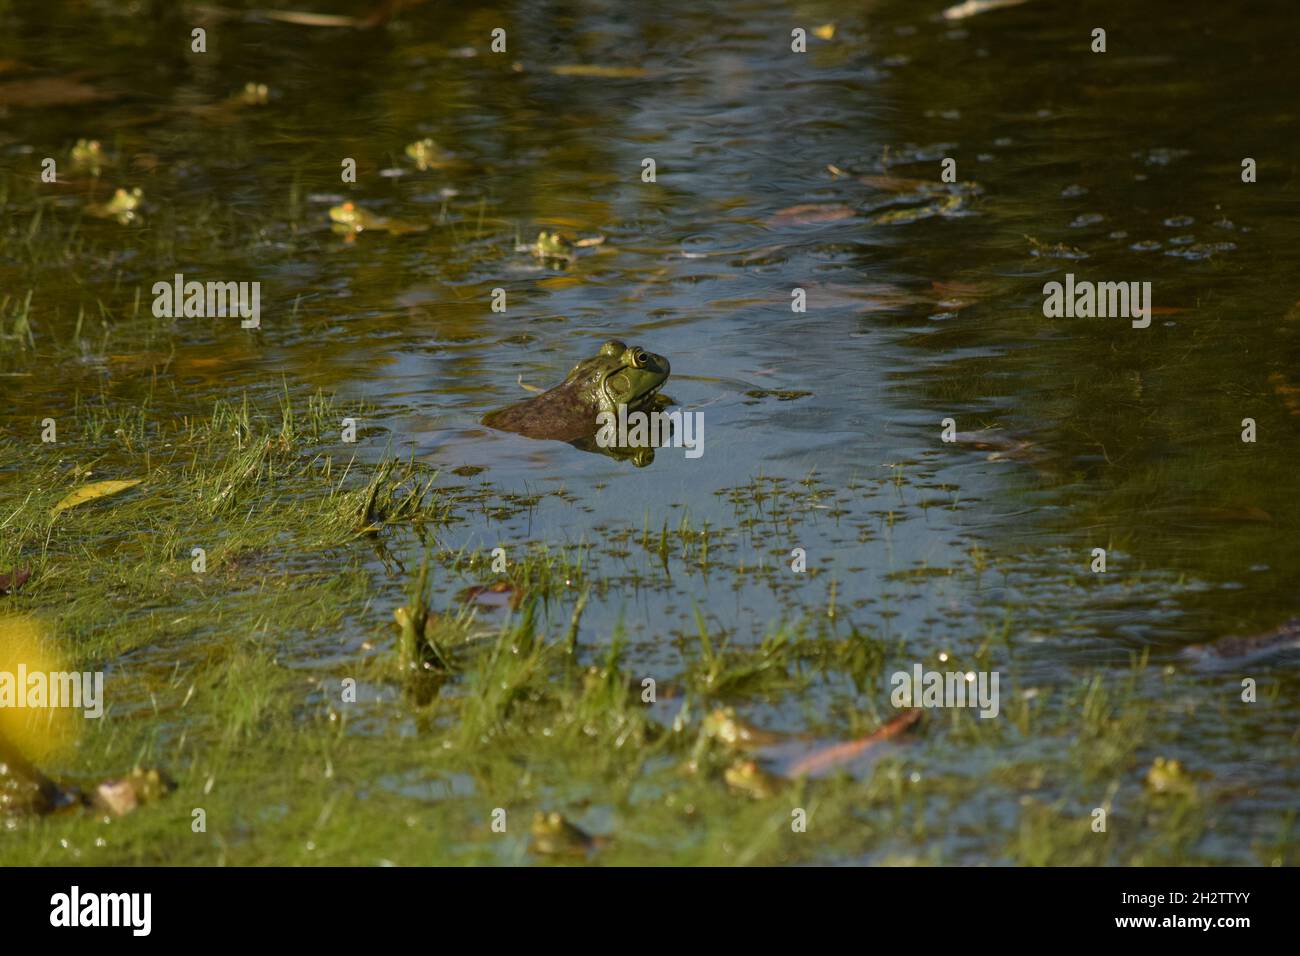 American Bullfrog (The Big One) Stock Photo